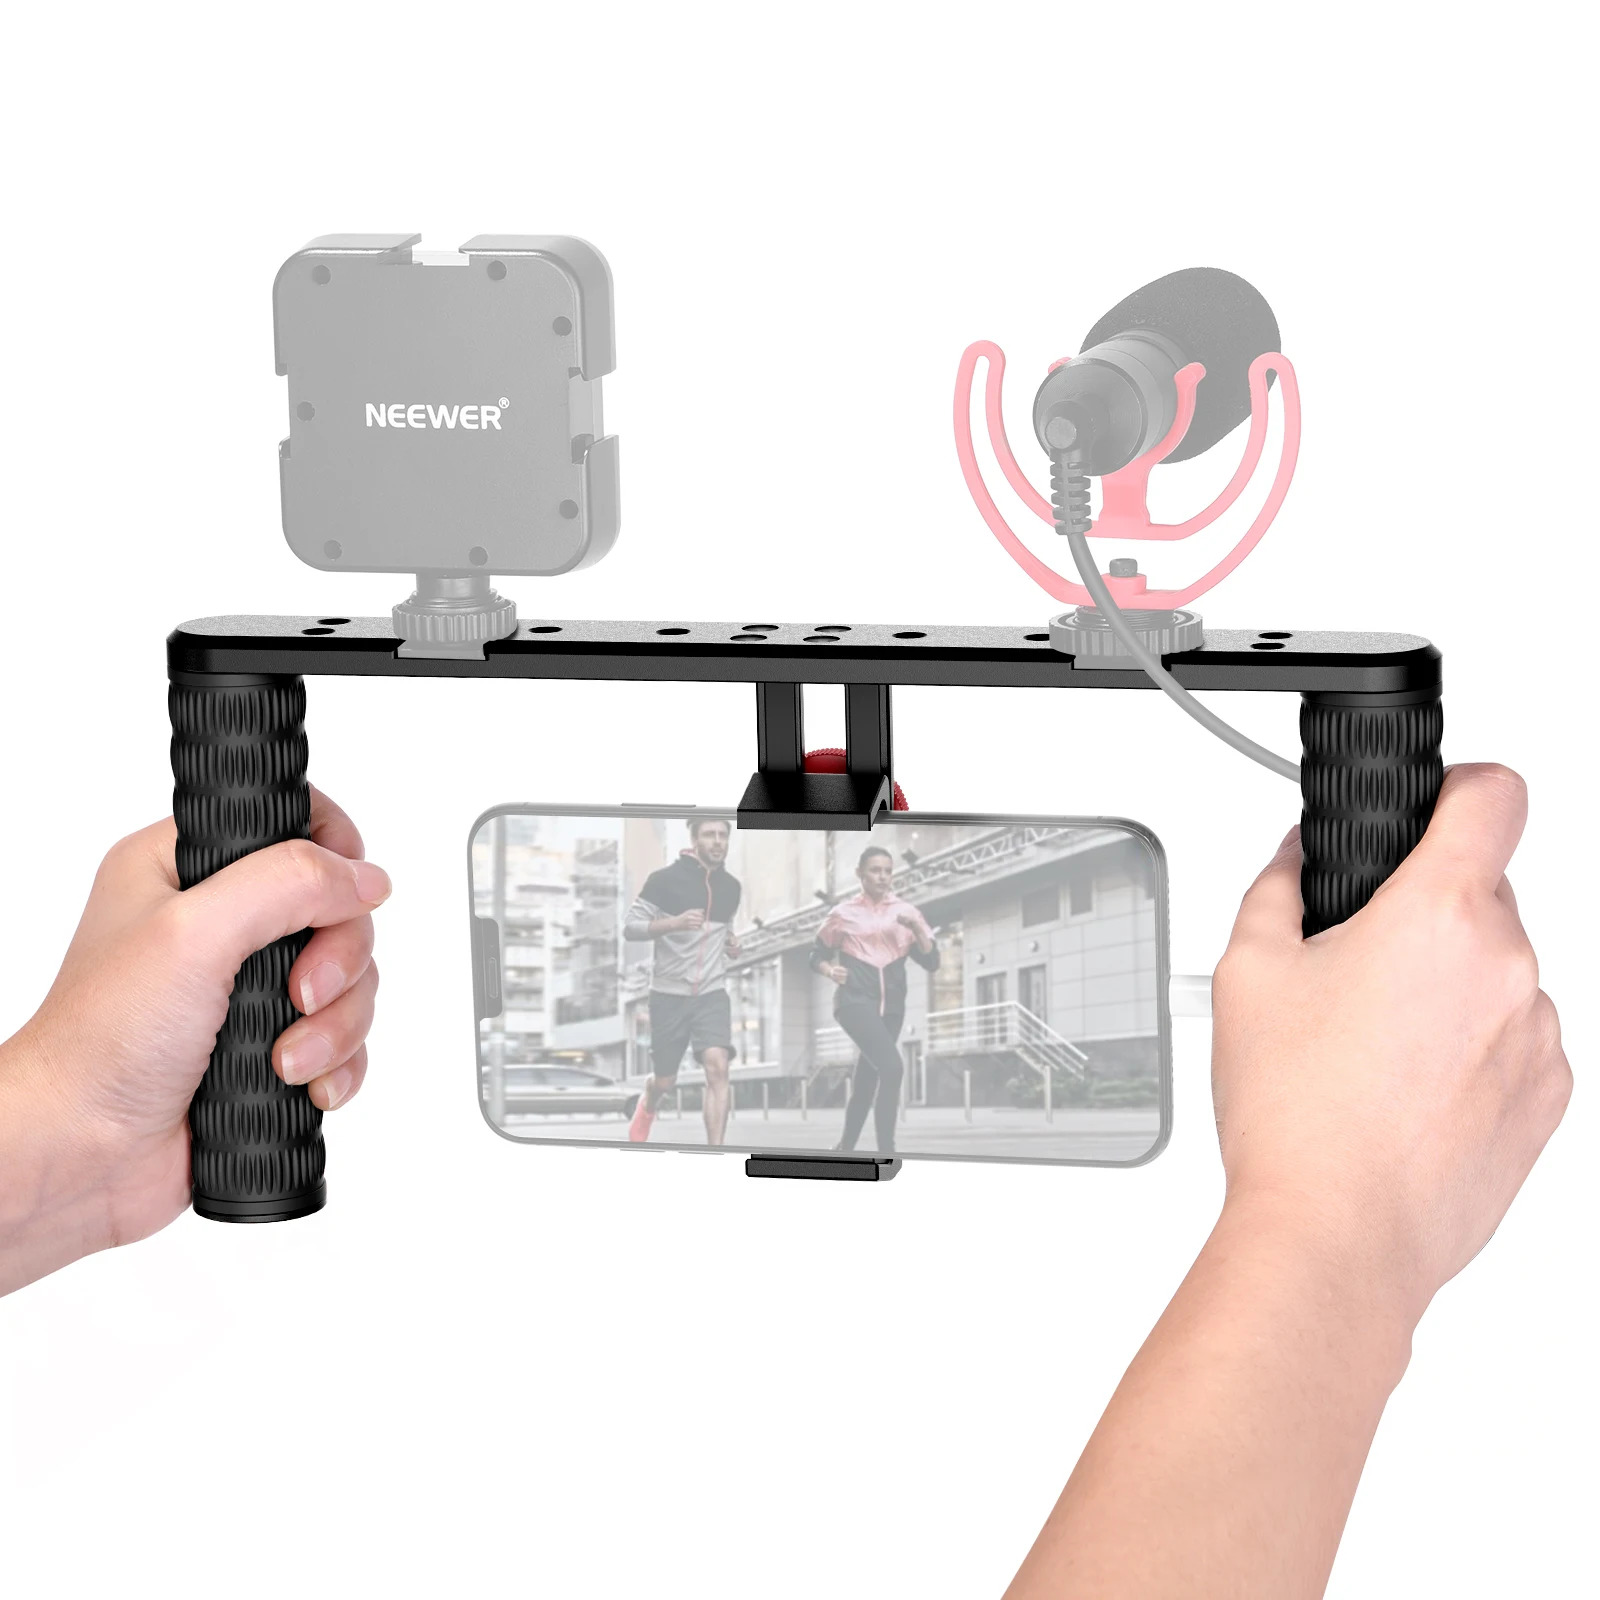 

Neewer Metal Smartphone Video Rig,Filmmaking Recording Vlogging Rig Case Handheld Grip Stabilizer with Cold Shoe Mount